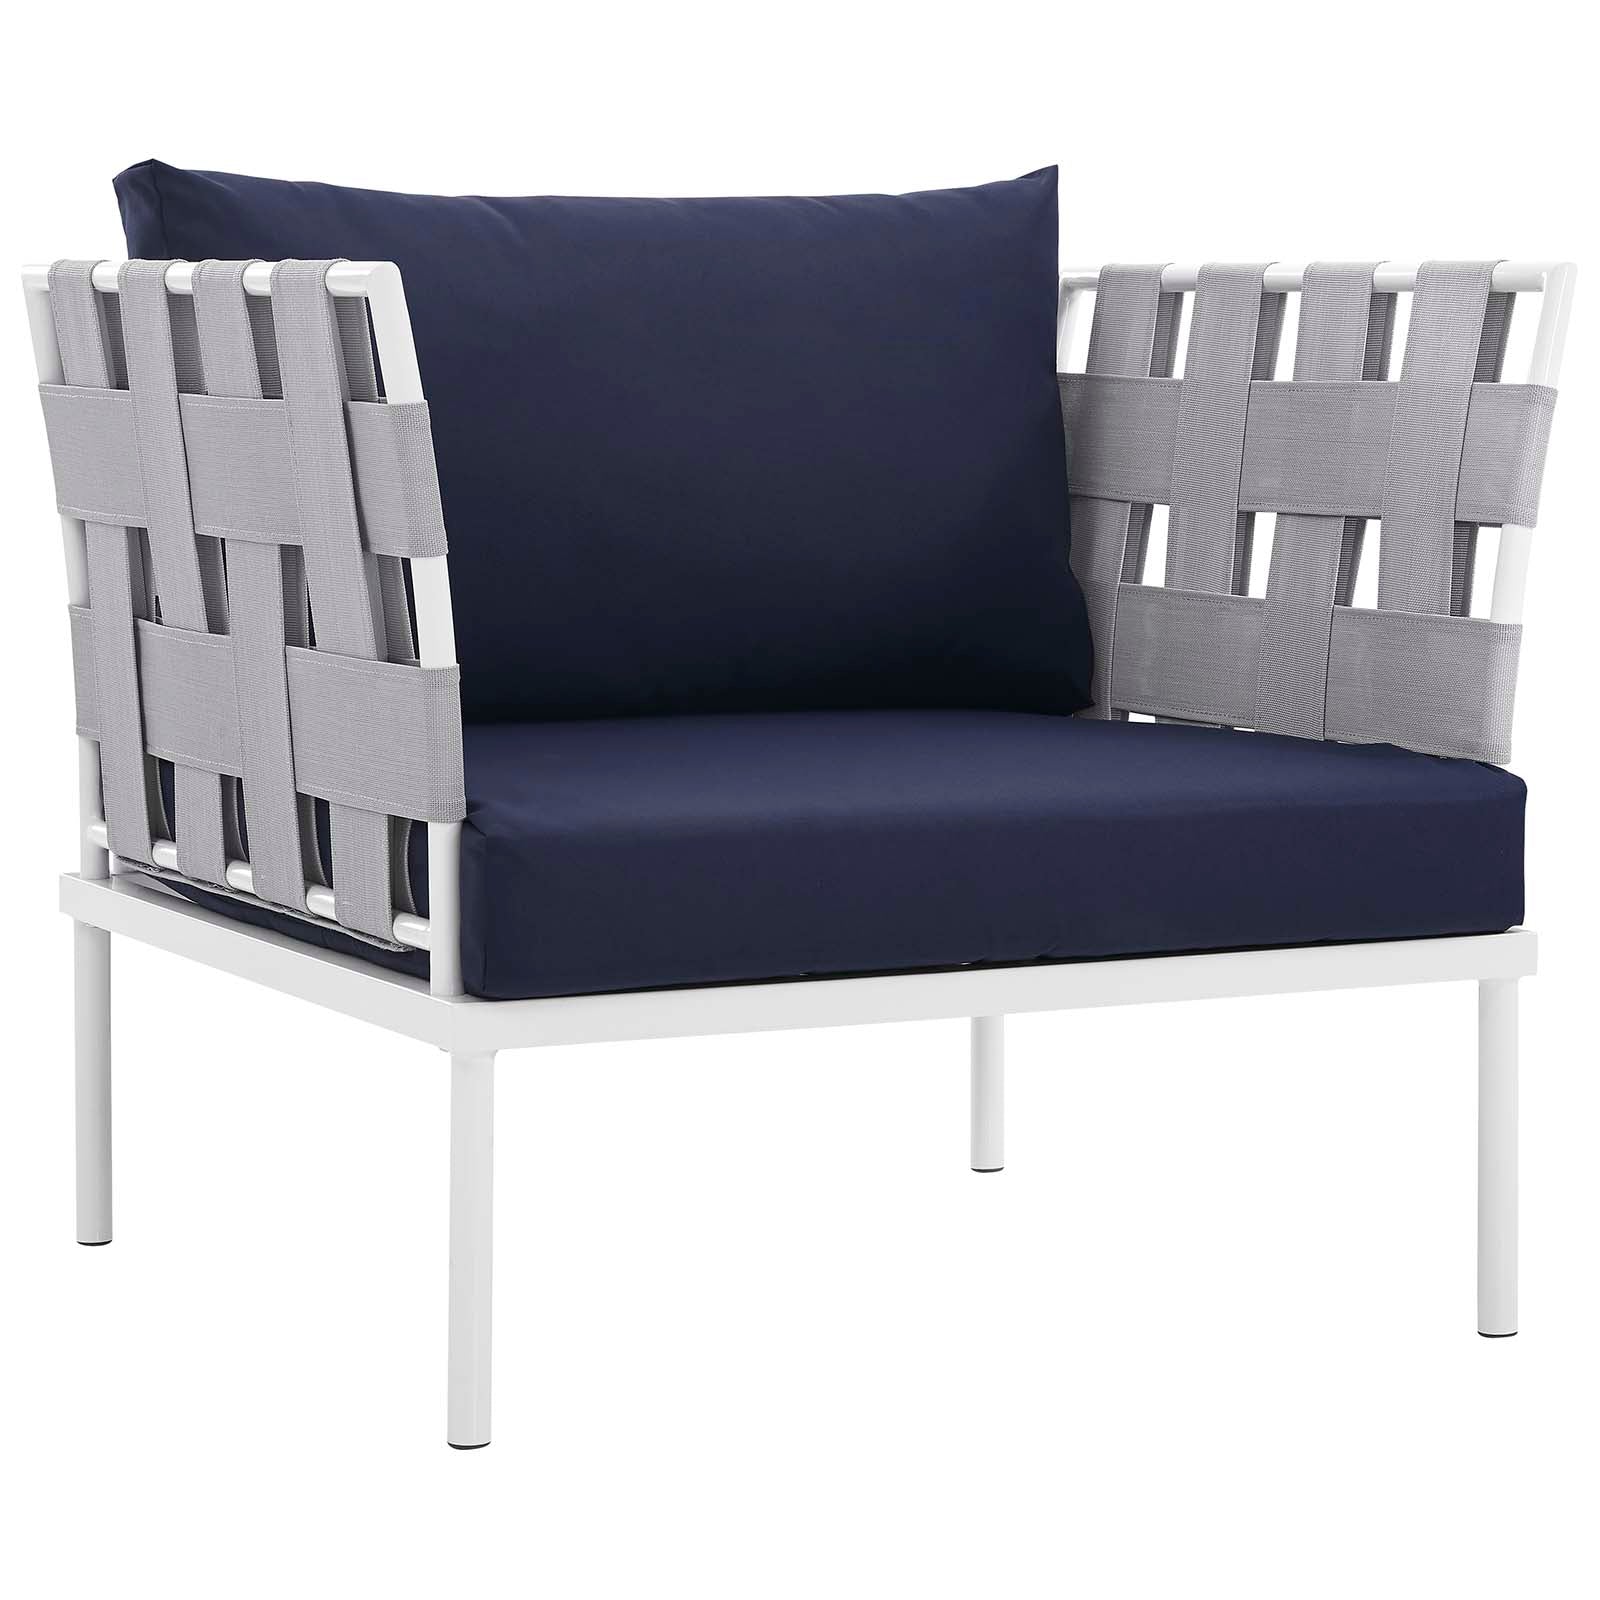 Modway Outdoor Sofas - Harmony 5 Piece Outdoor Patio Sectional Sofa Set White Navy